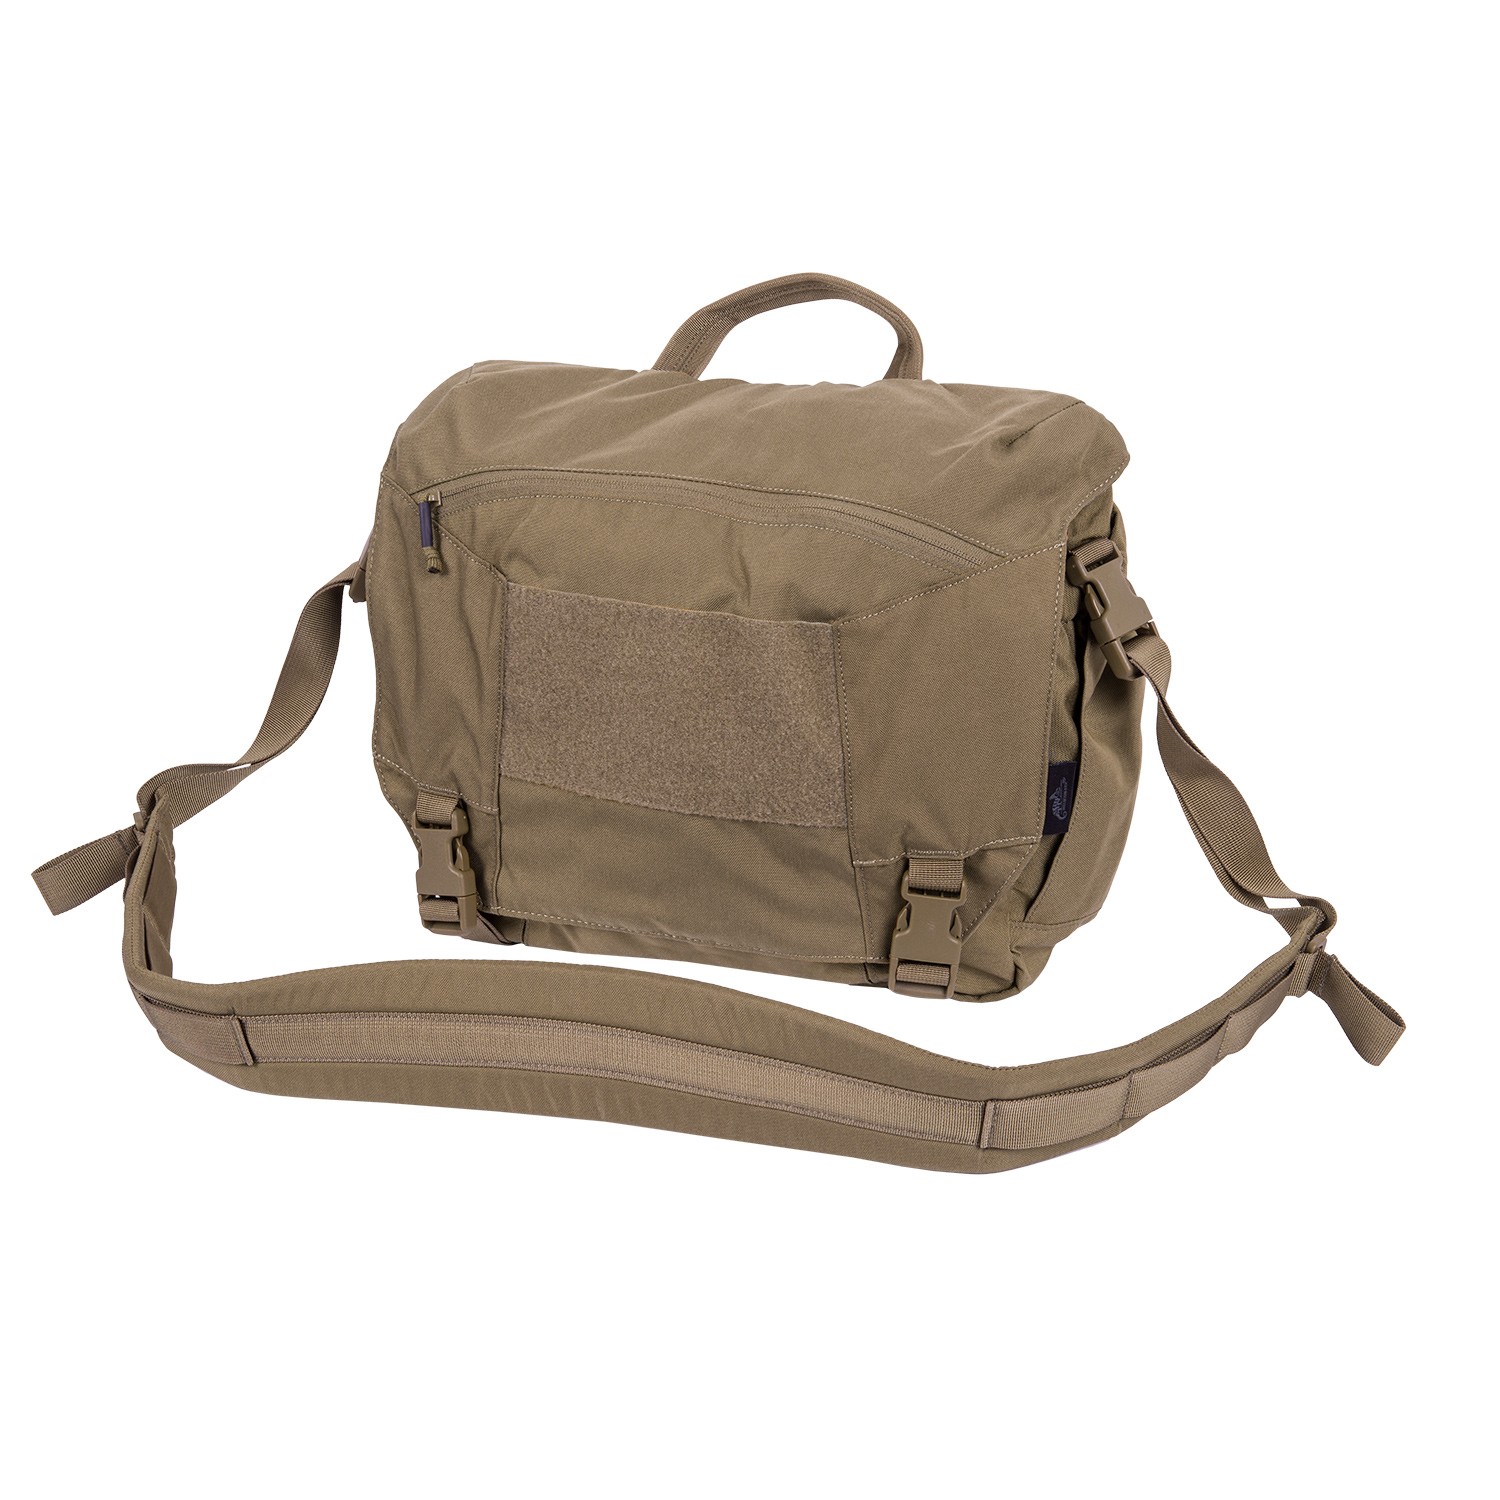 The ITS Discreet Messenger Bag is Back! - ITS Tactical